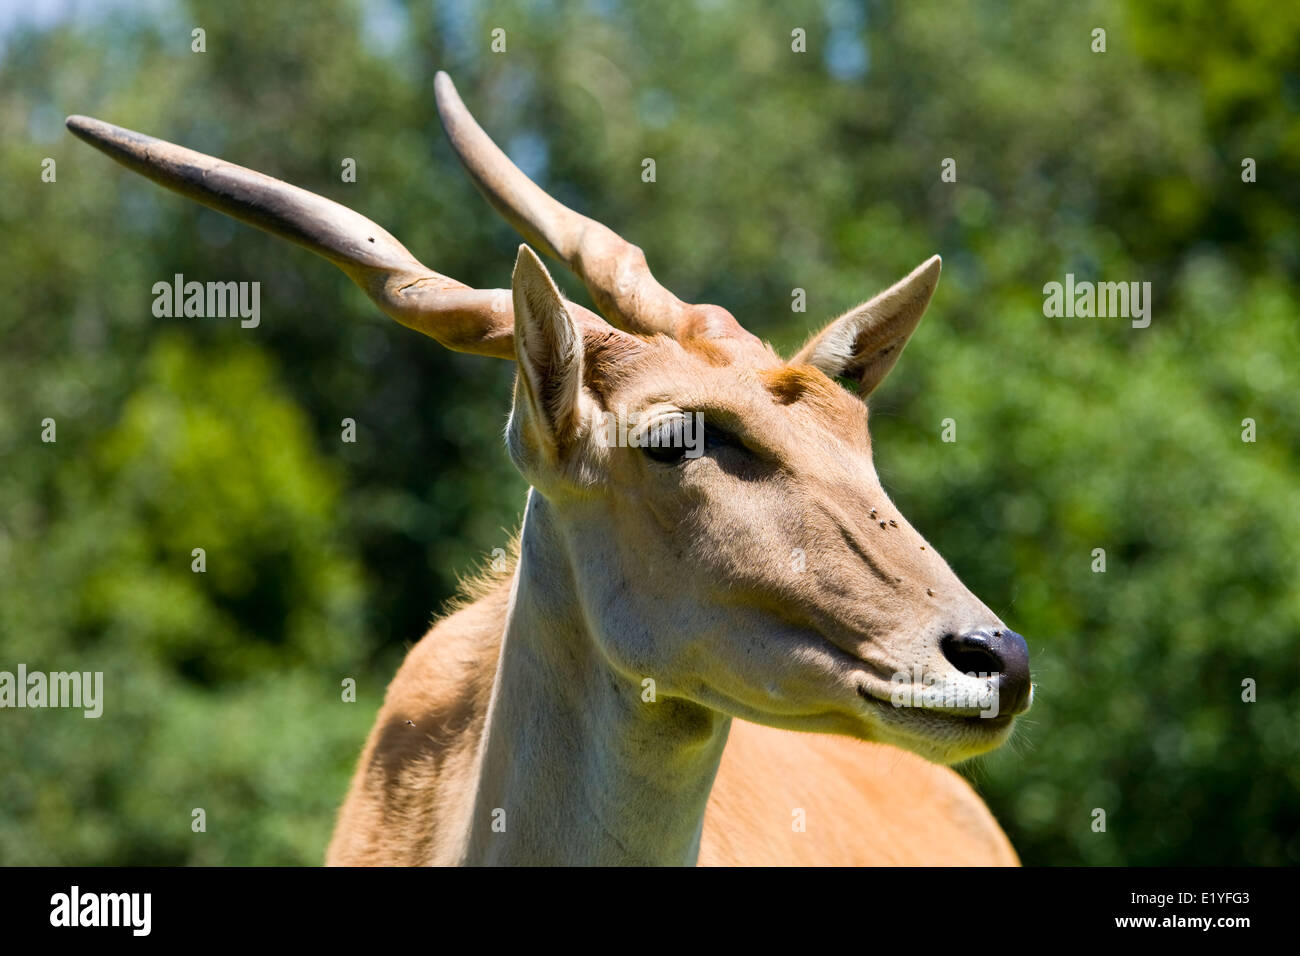 Eland comune (Taurotragus oryx), noto anche come il sud o eland eland antelope Foto Stock